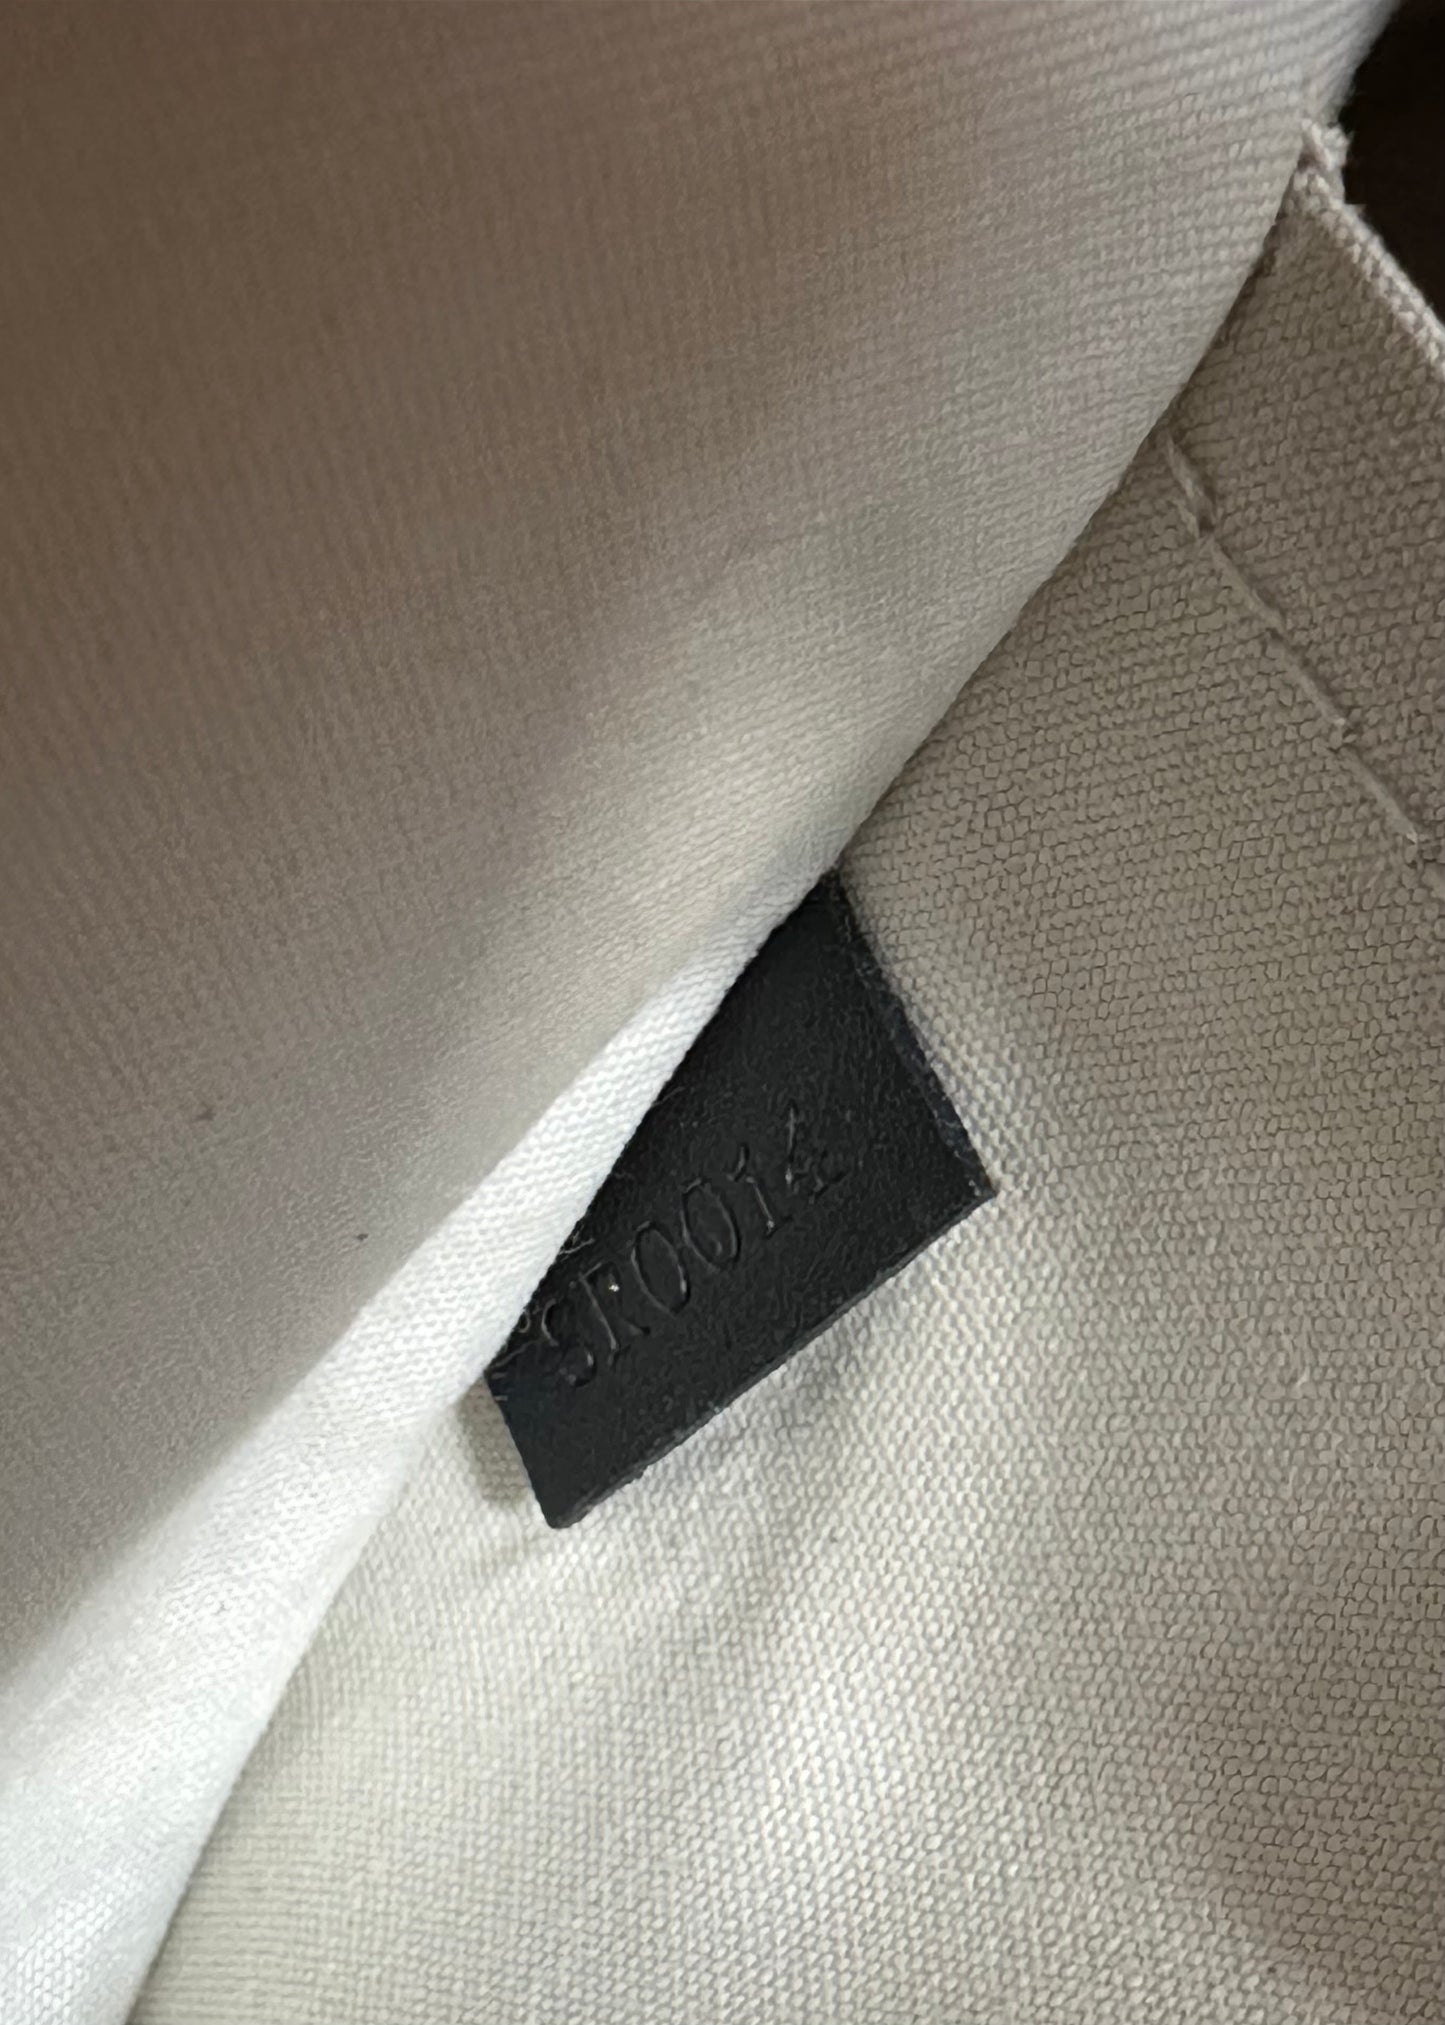 Pre-owned Authentic Louis Vuitton Lucille PM Navy Monogram Mini Lin Bag